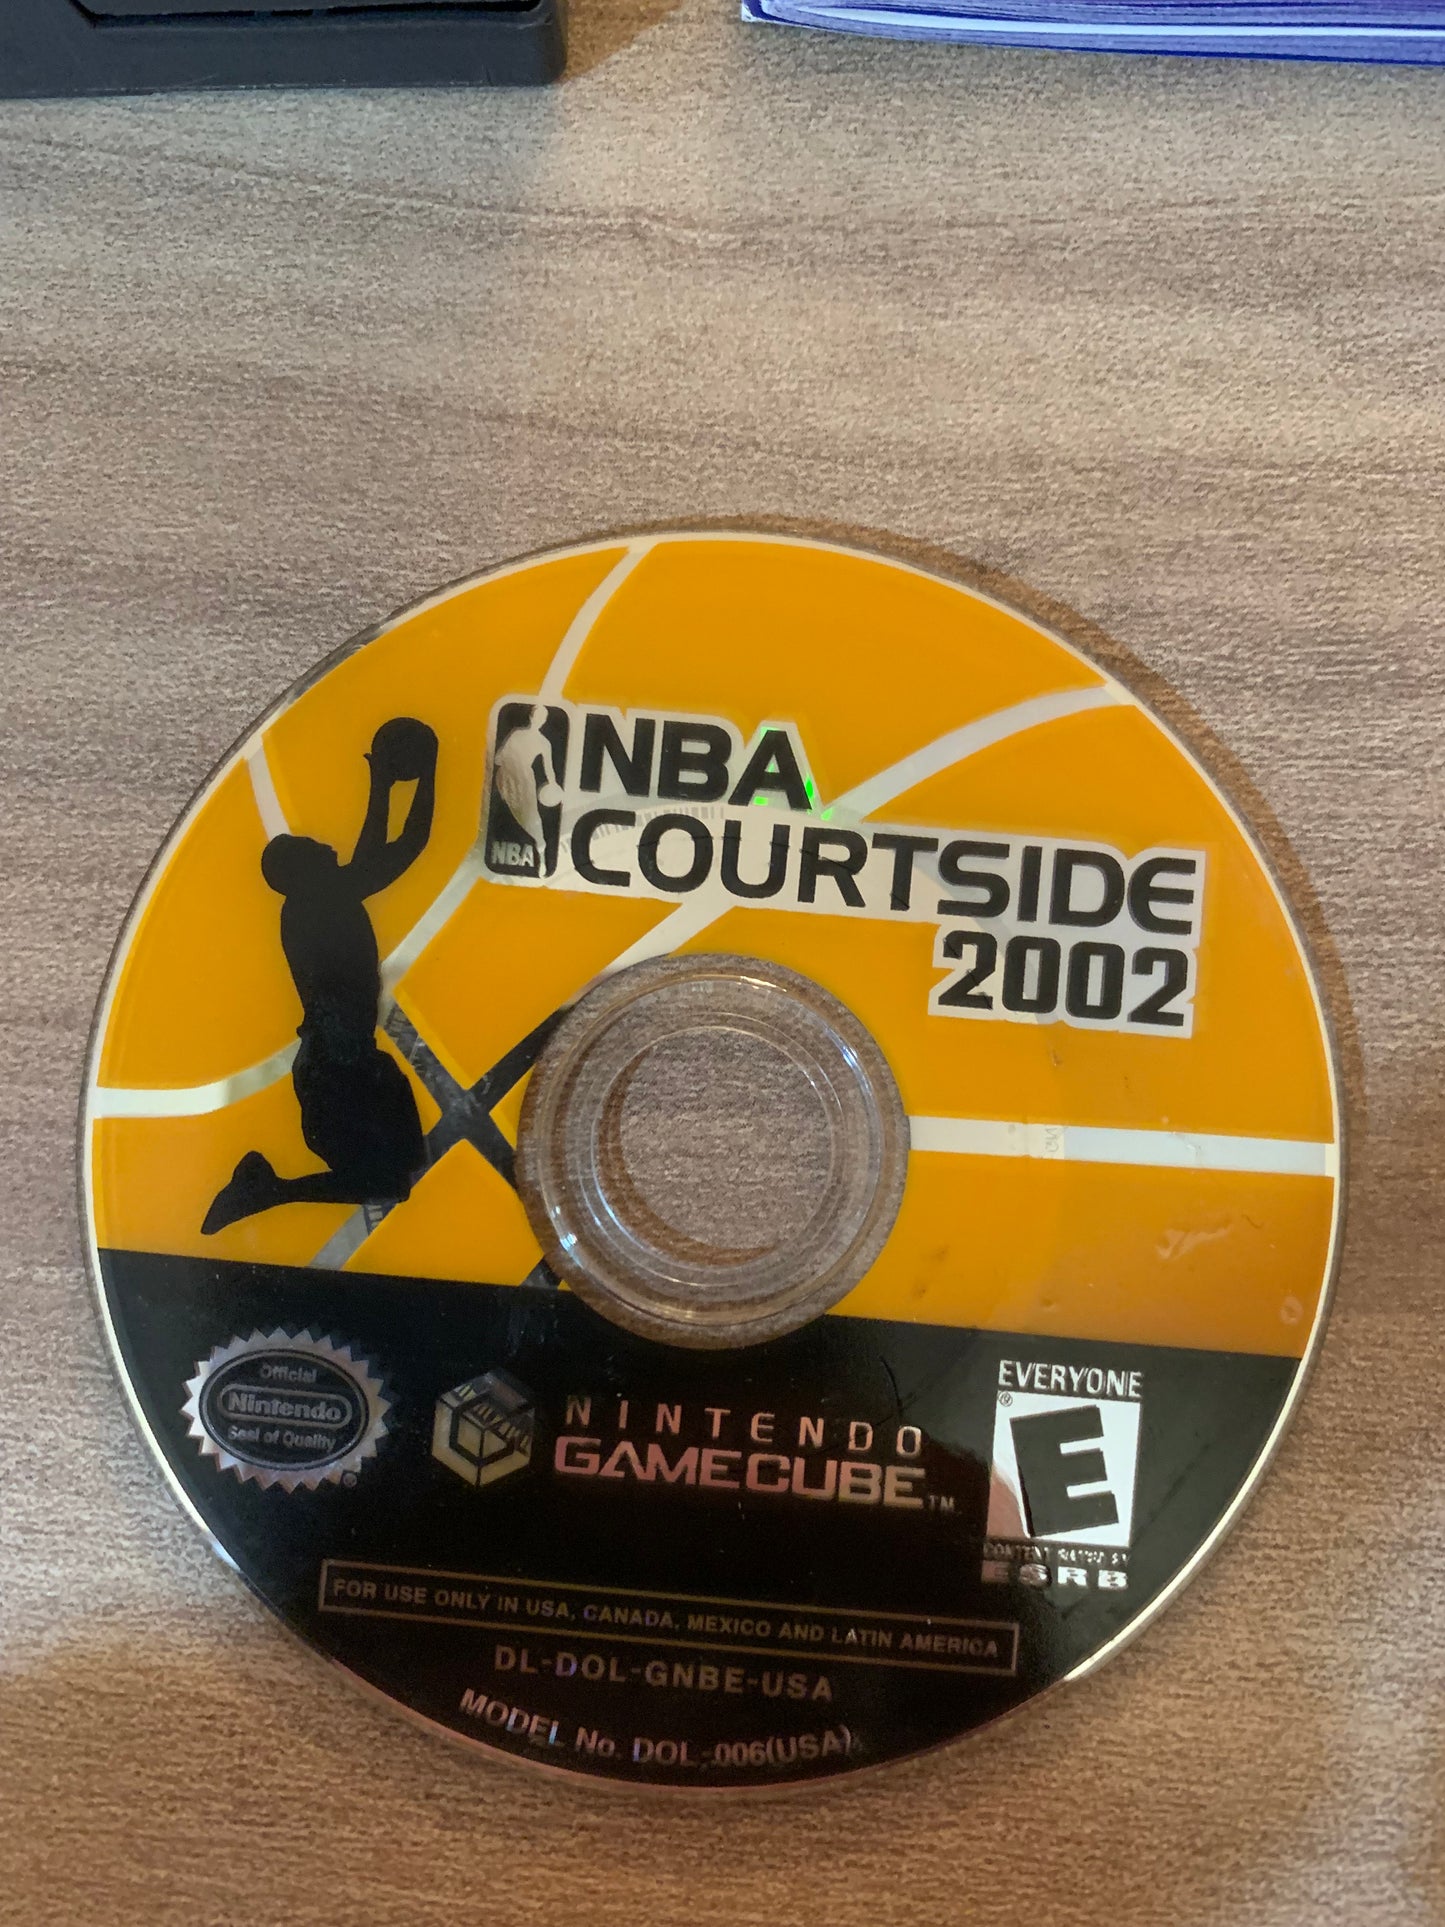 NiNTENDO GAMECUBE [NGC] | NBA COURTSiDE 2002 KOBY BRYANT